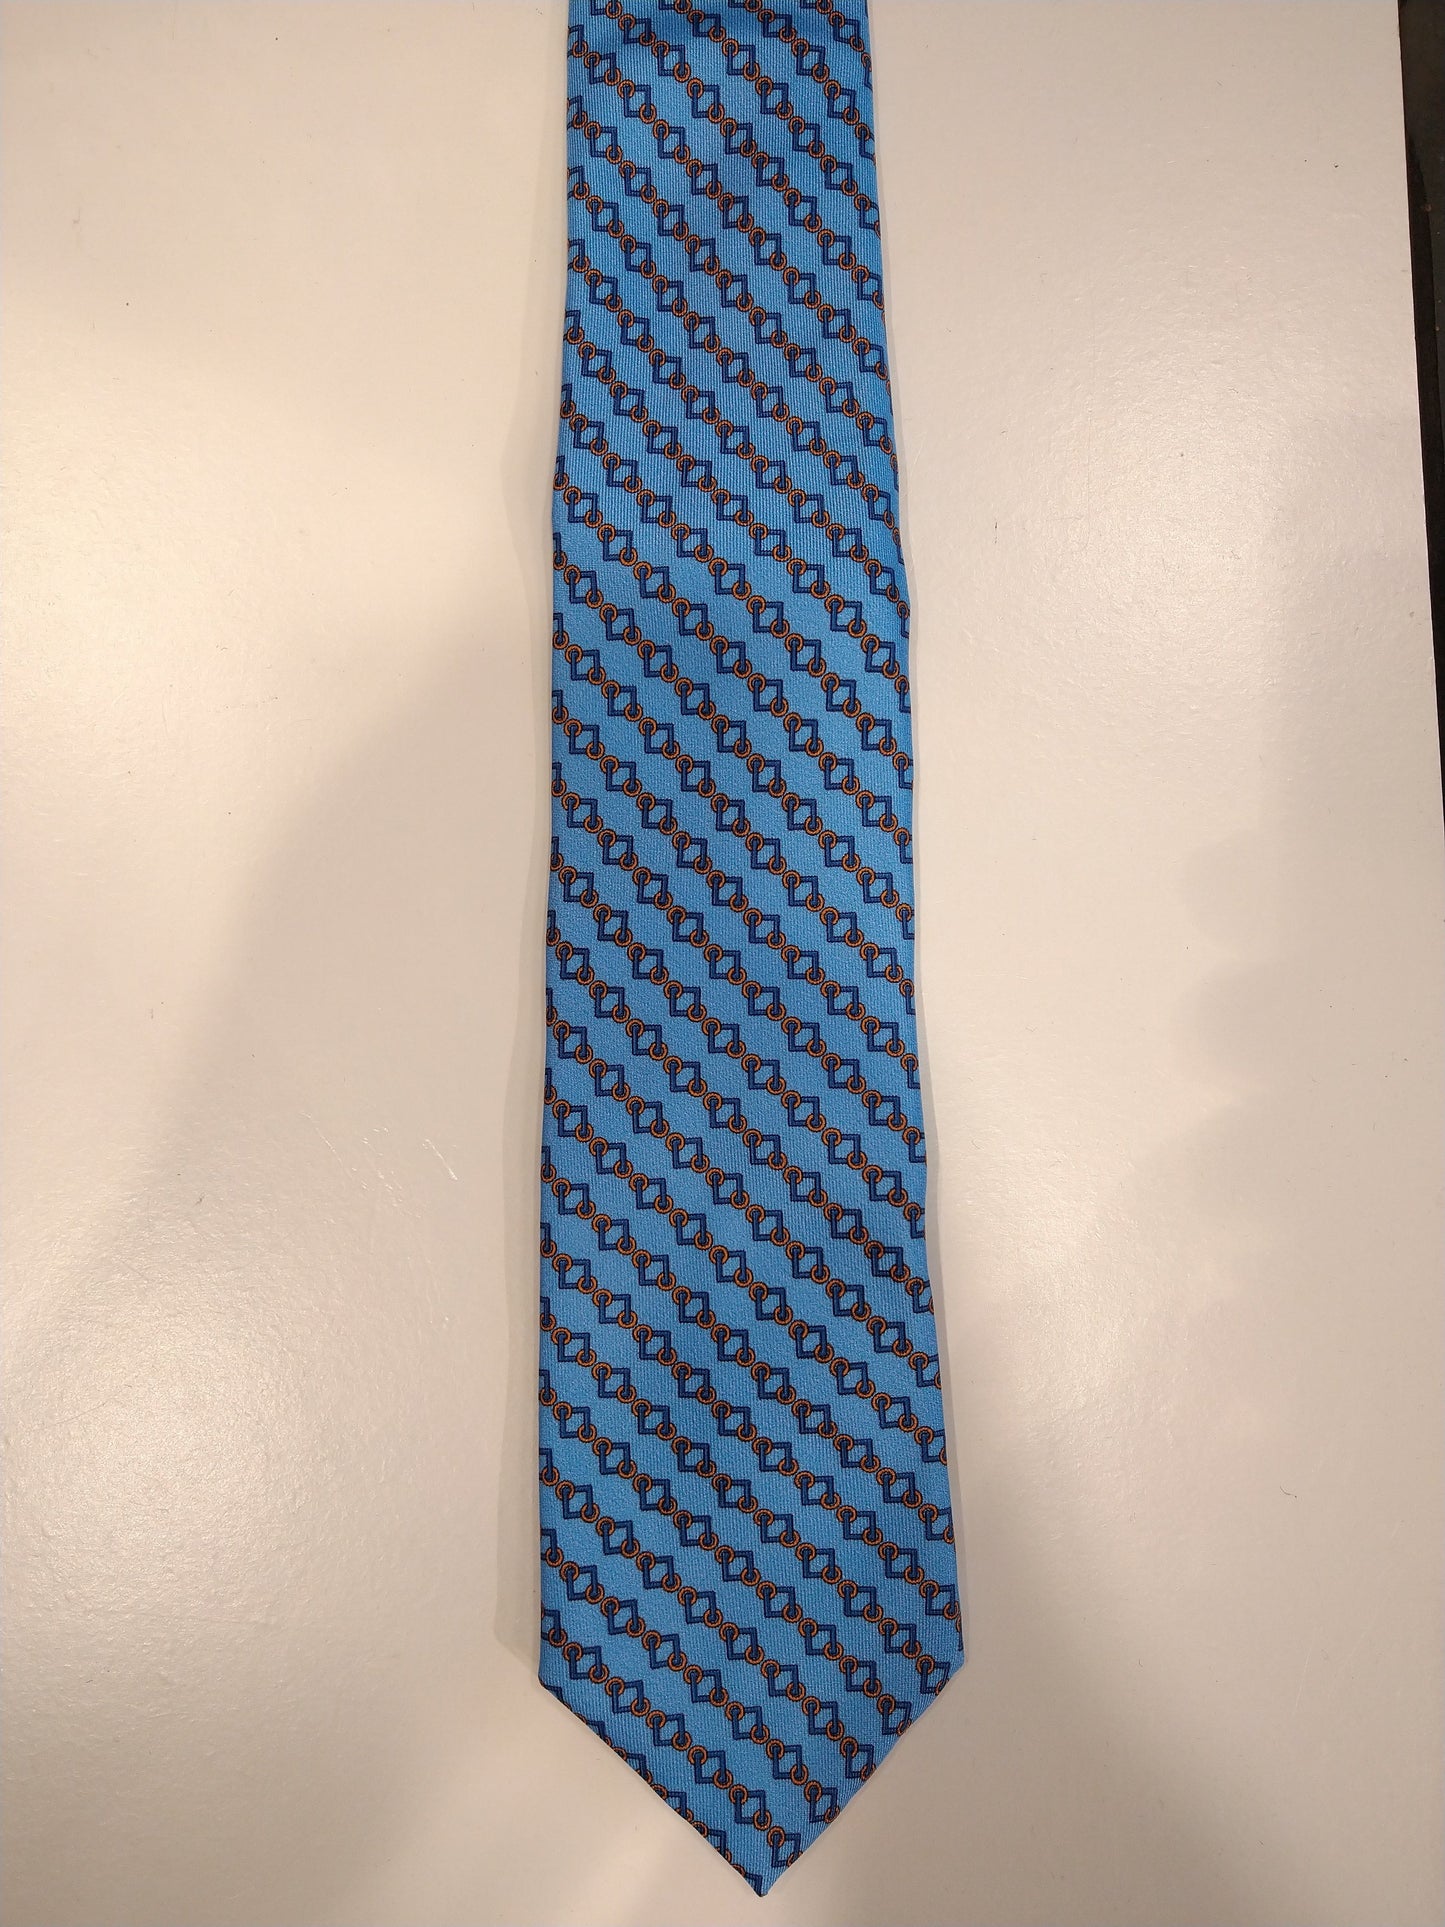 Marchesi di como narrow silk tie. Nice blue / red motif.